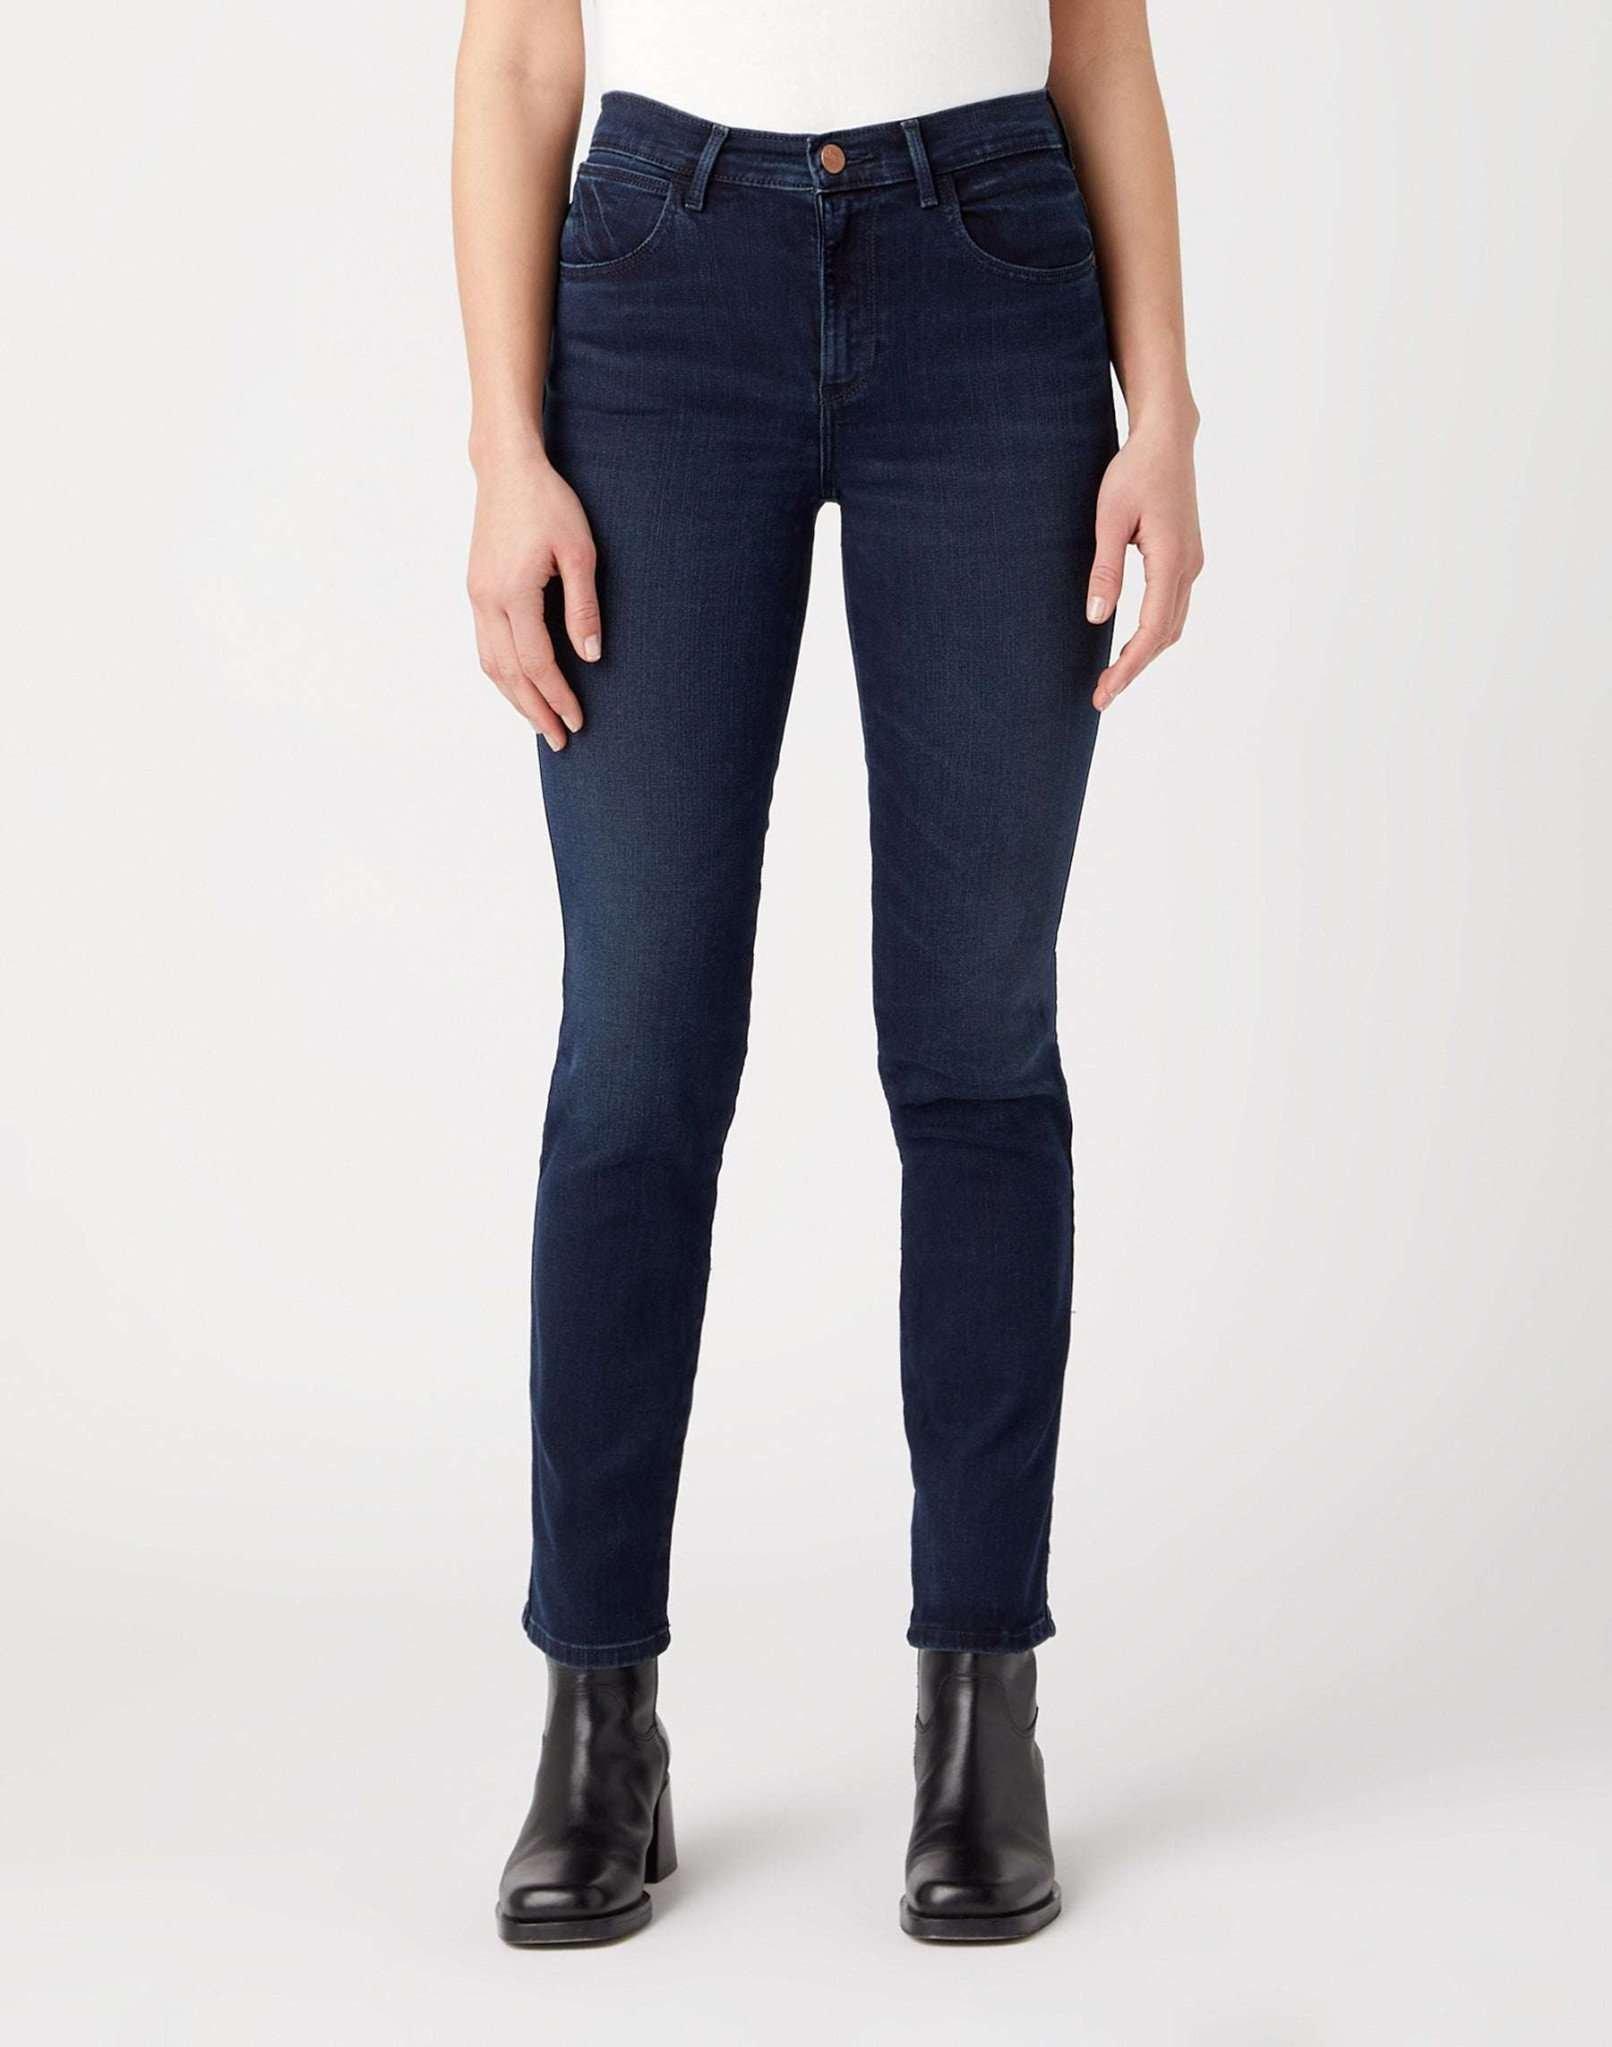 Jeans Slim Fit Slim Damen Marine L32/W27 von Wrangler